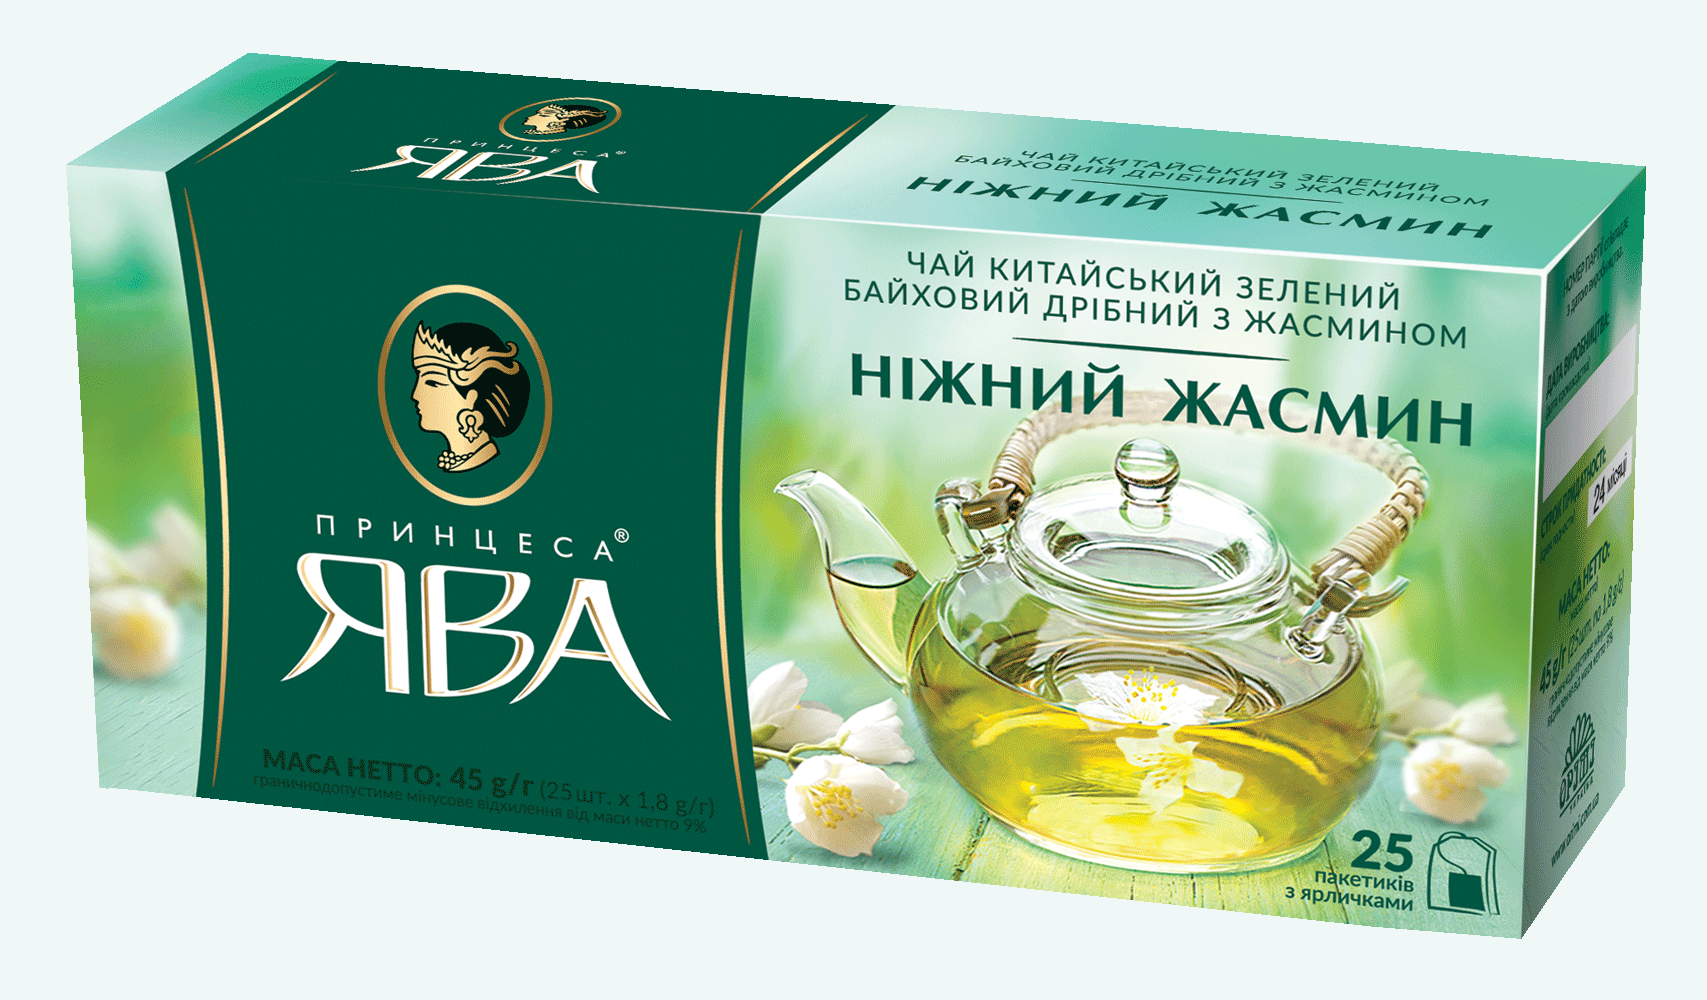 Чай принцесса Ява зеленый с жасмином 25 пак. Чай зел пак ФАС принцесса Ява 25пак*2г. Купить чай ява